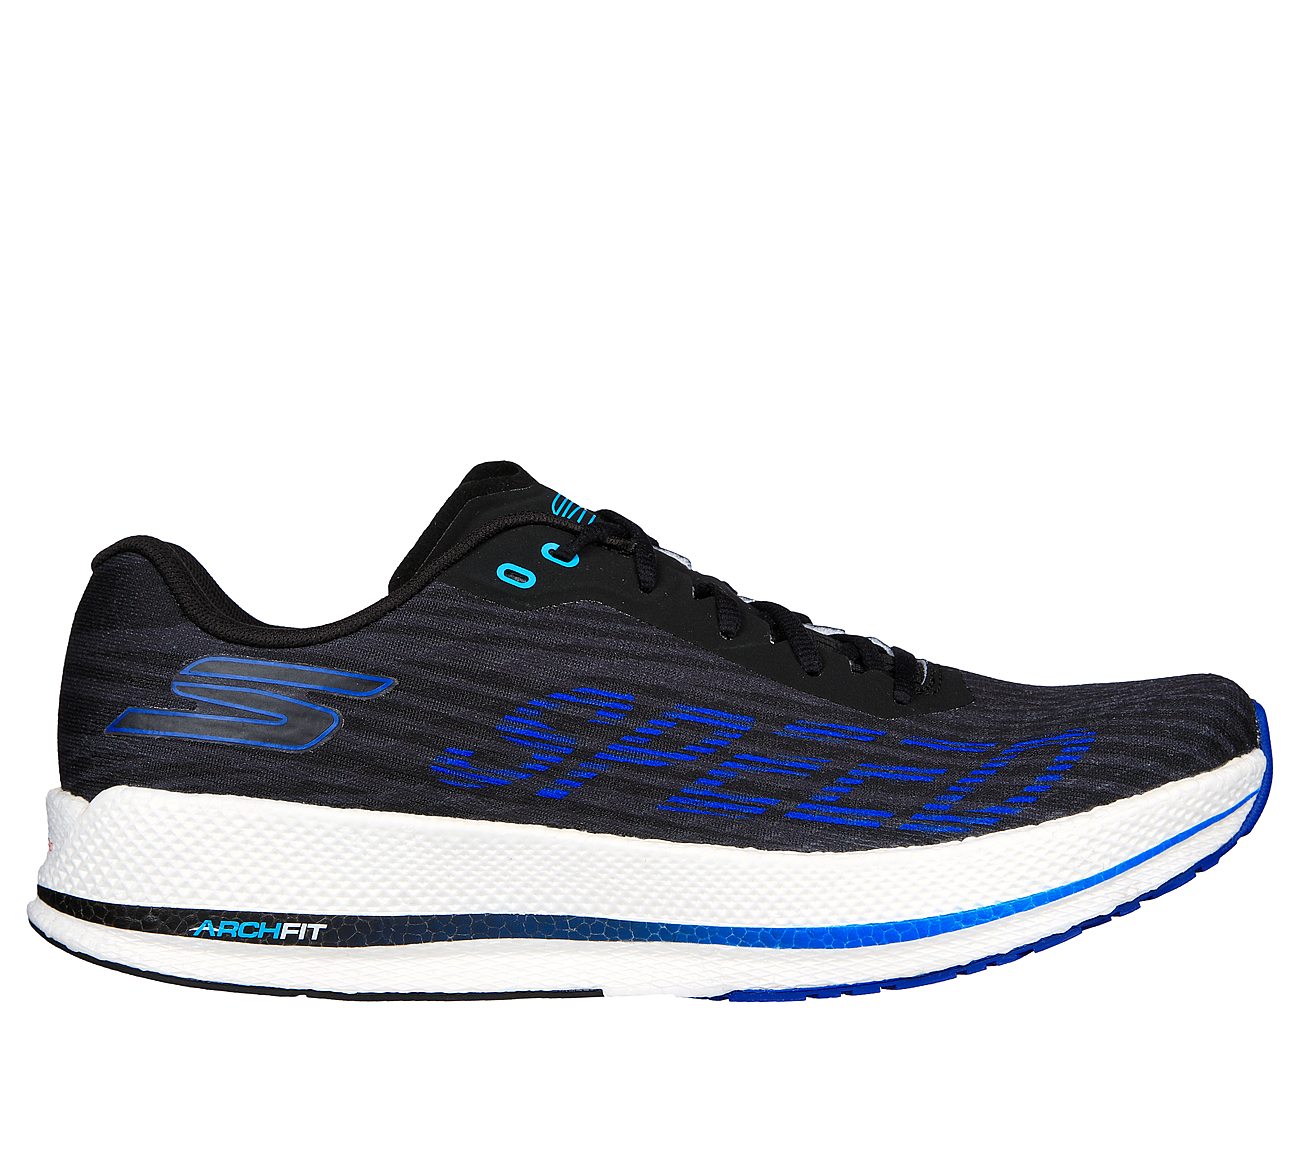 GO RUN RAZOR 4, BLACK/BLUE Footwear Lateral View